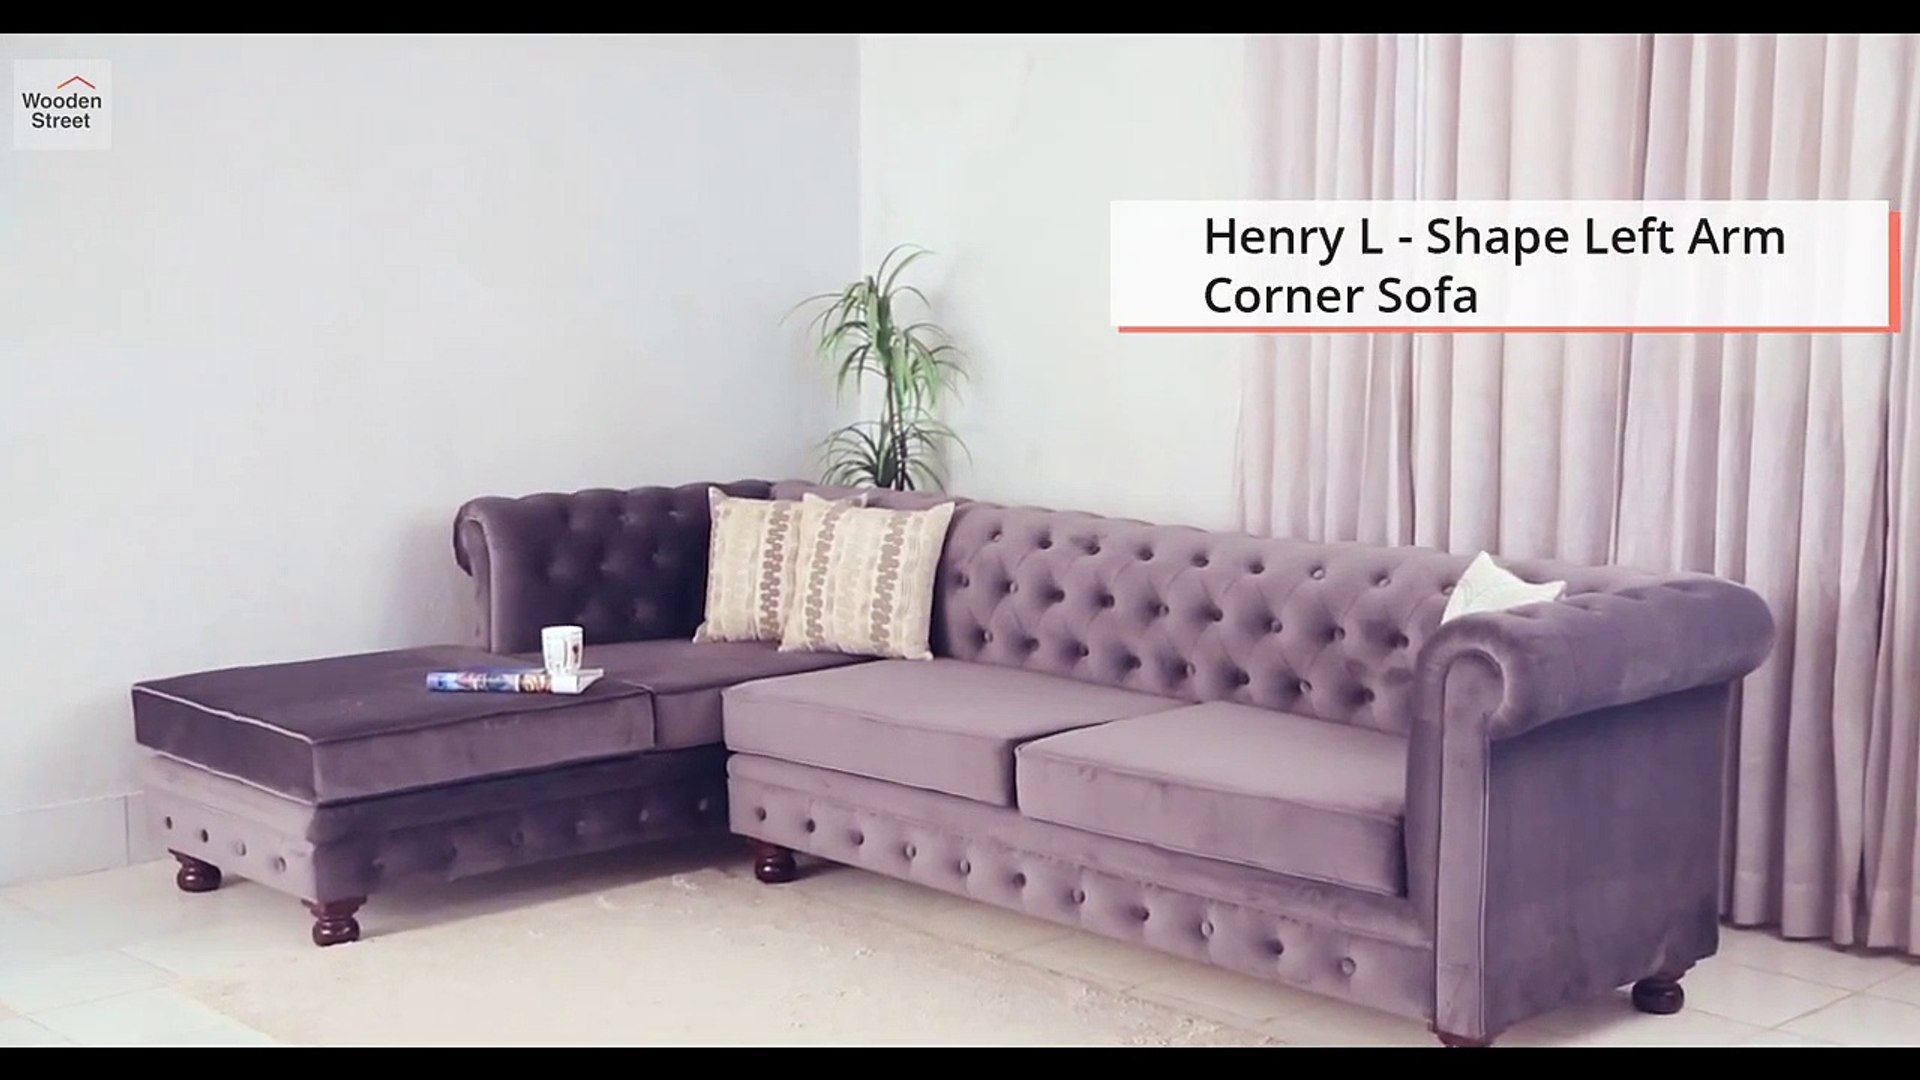 Corner Sofa Henry L Shaped Left Arm Corner Sofa Set Corner Sofa Design By Wooden Street Video Dailymotion